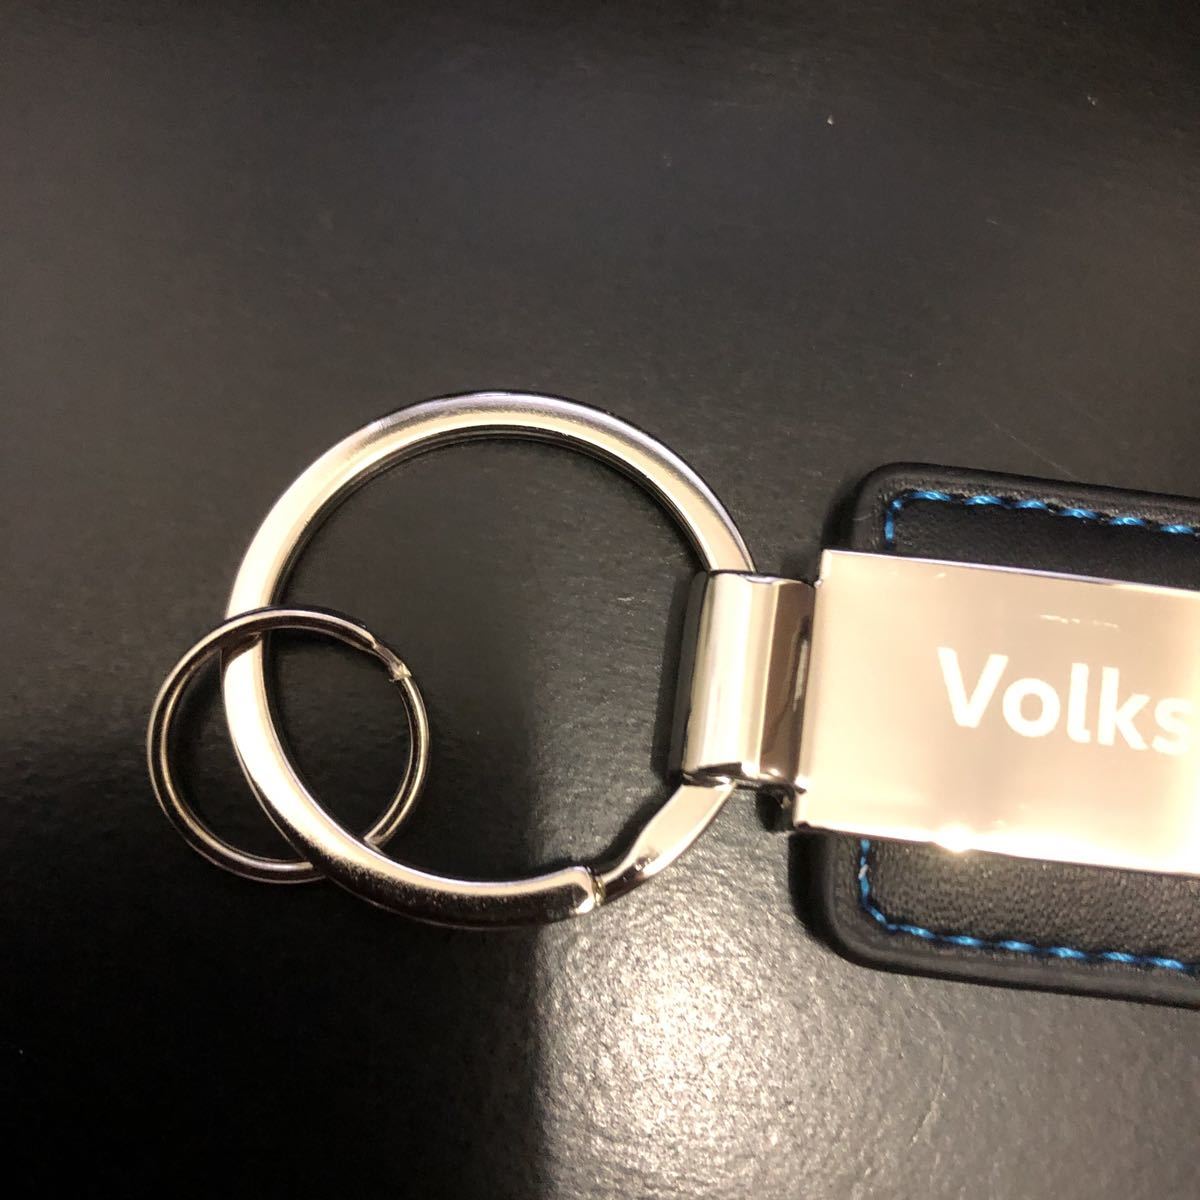  unused * Volkswagen original key holder key ring black / blue stitch Volkswagen original Novelty * not for sale 